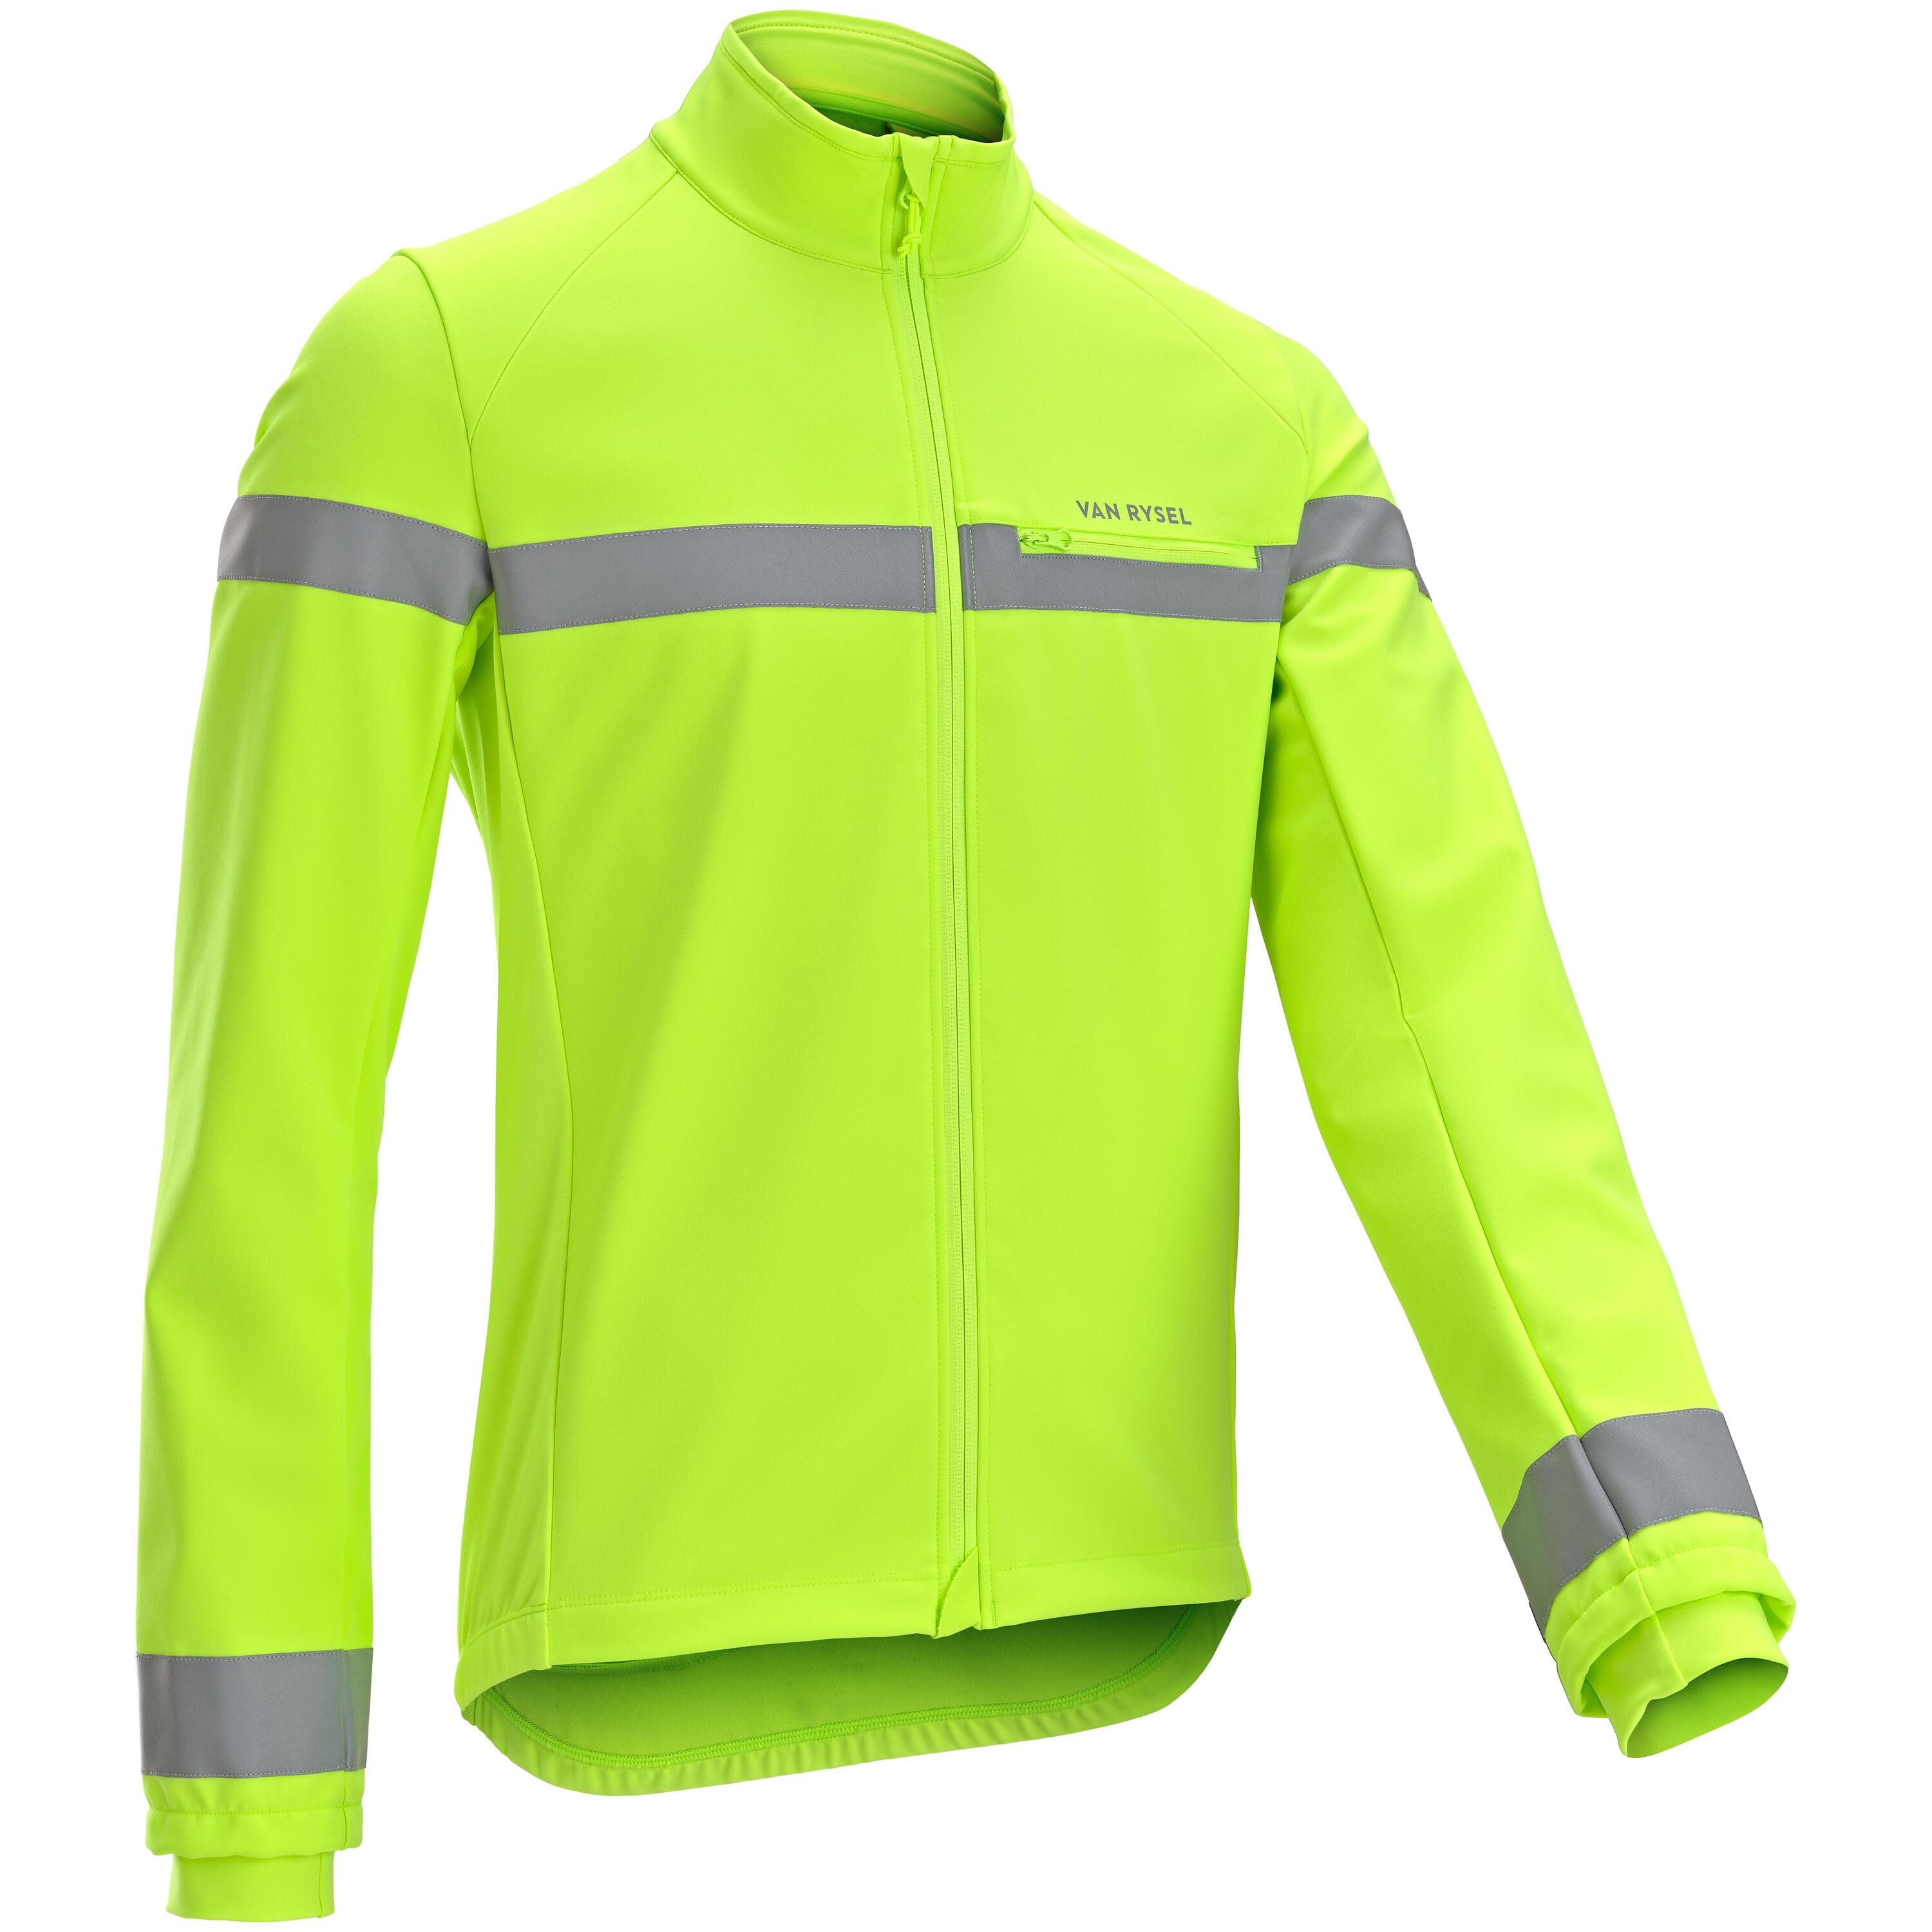 Men's Long-Sleeved Road Cycling Winter Jacket Discover EN17353 2/9